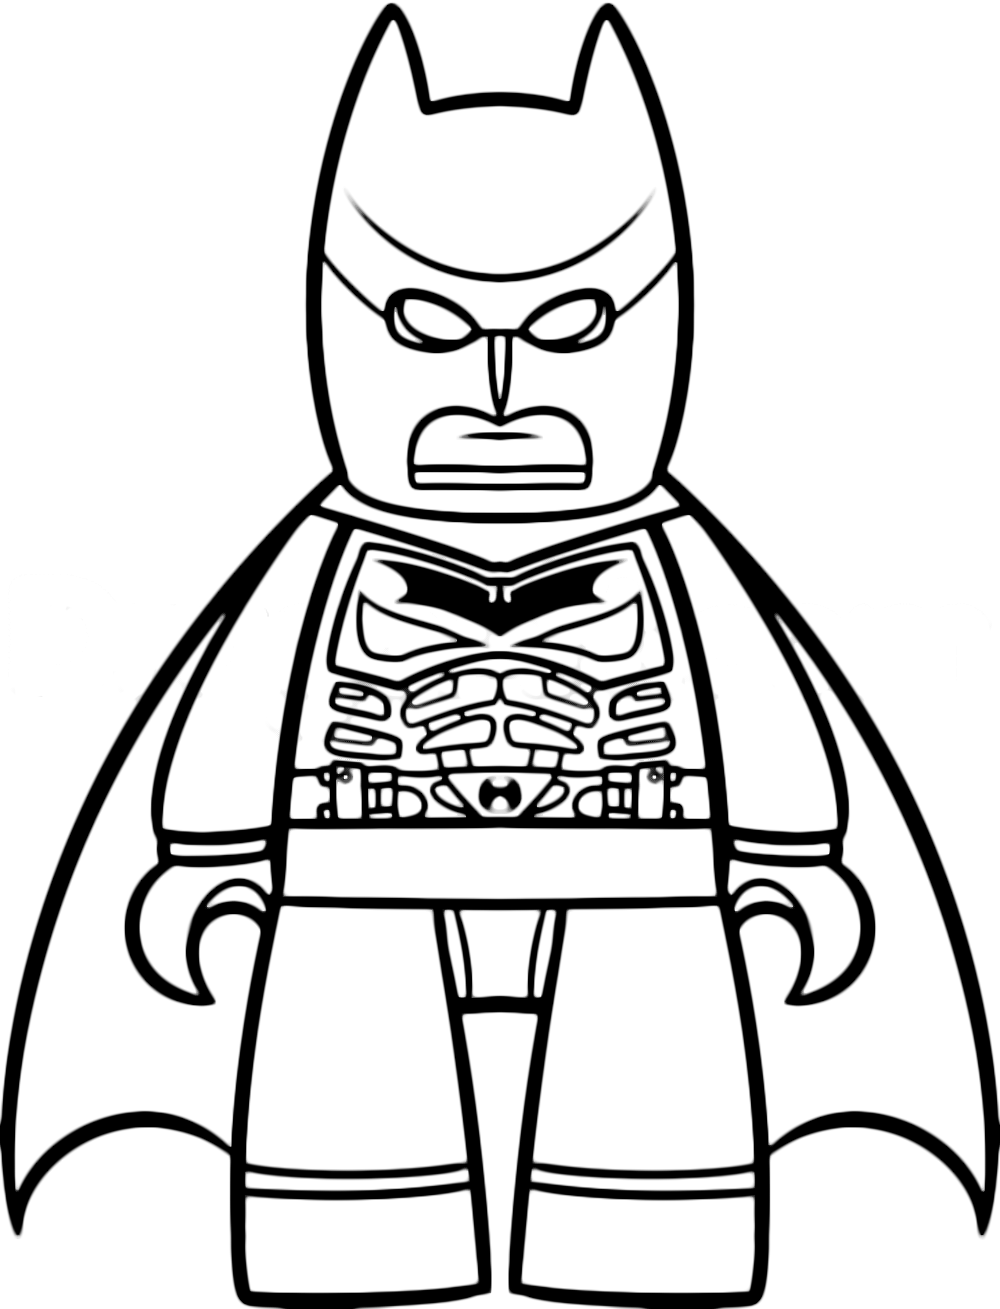 The LEGO Movie - Batman with his cloak